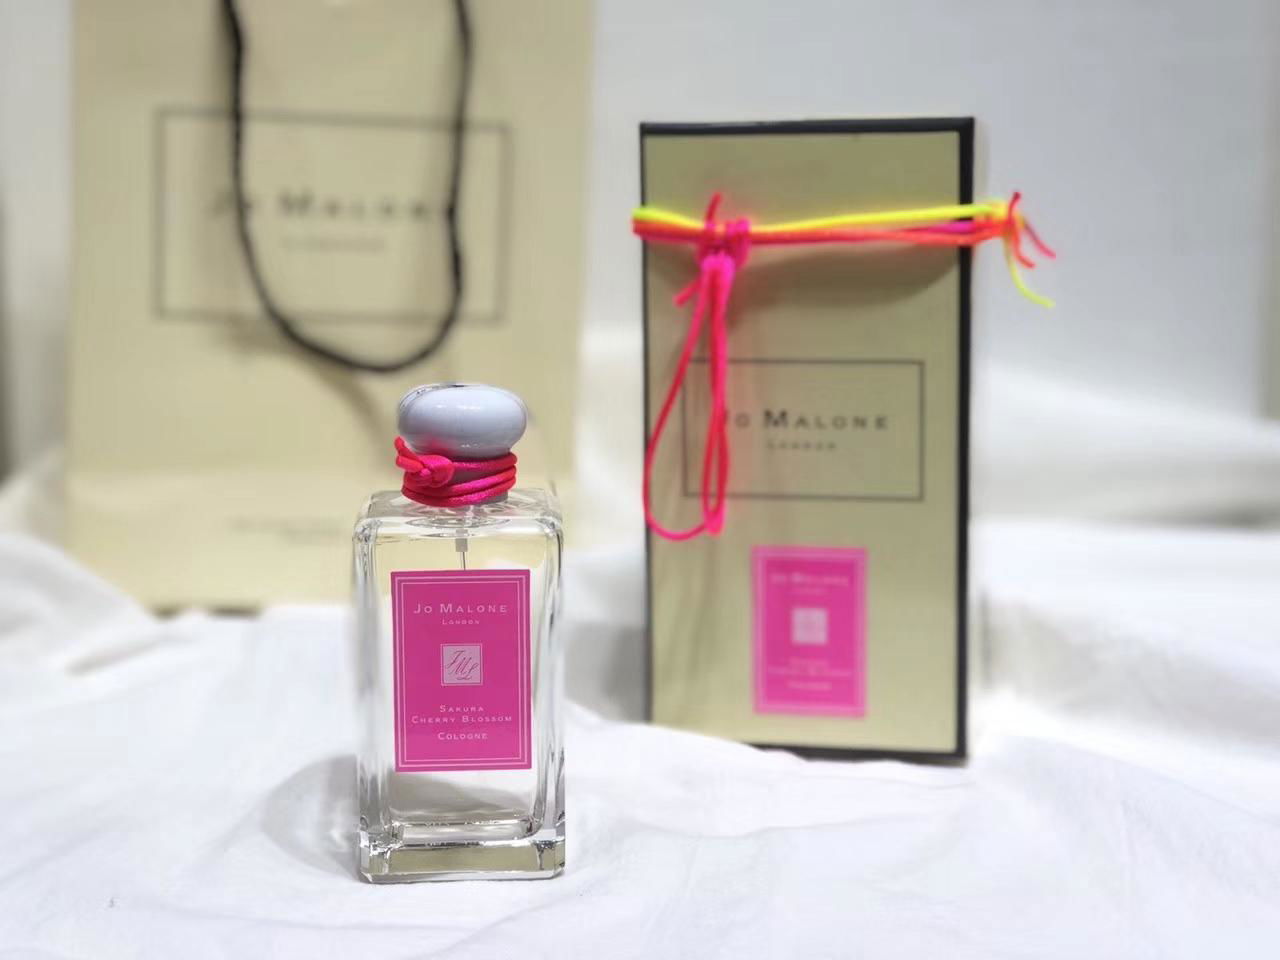 1-1 quality new perfume Jo malone brand perfume for women